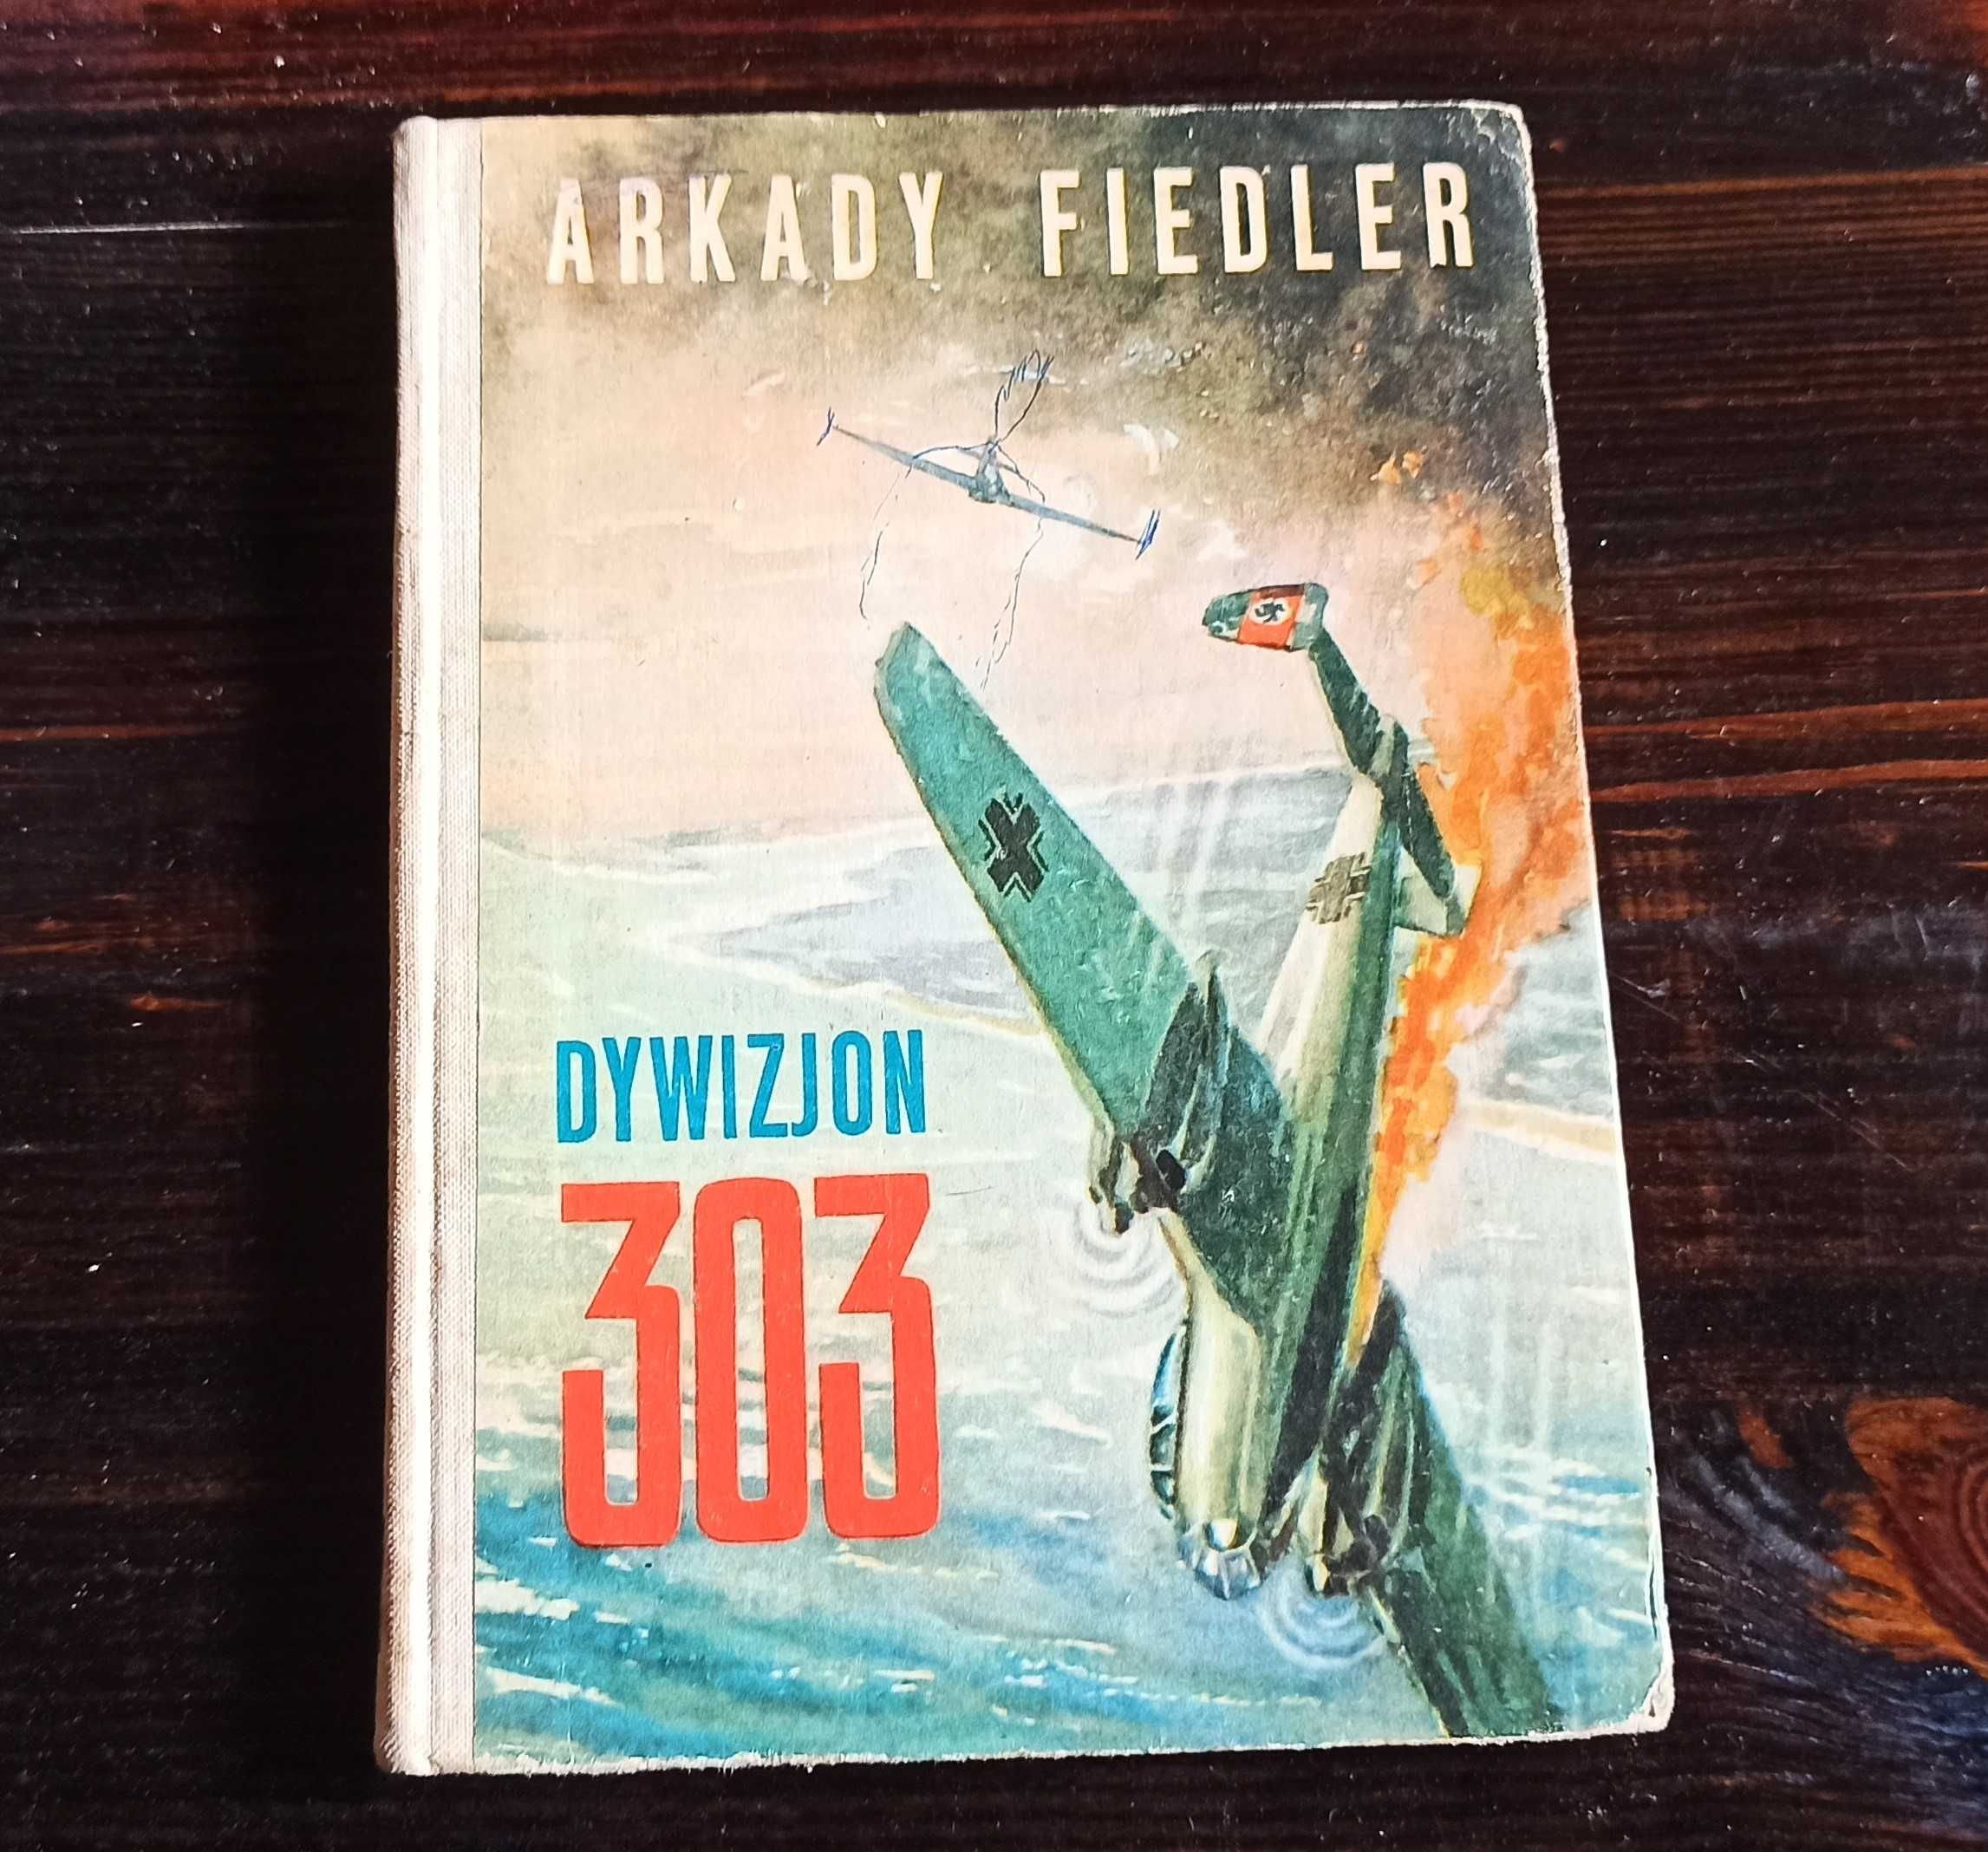 Arkady Fidler -Dywizjon 303